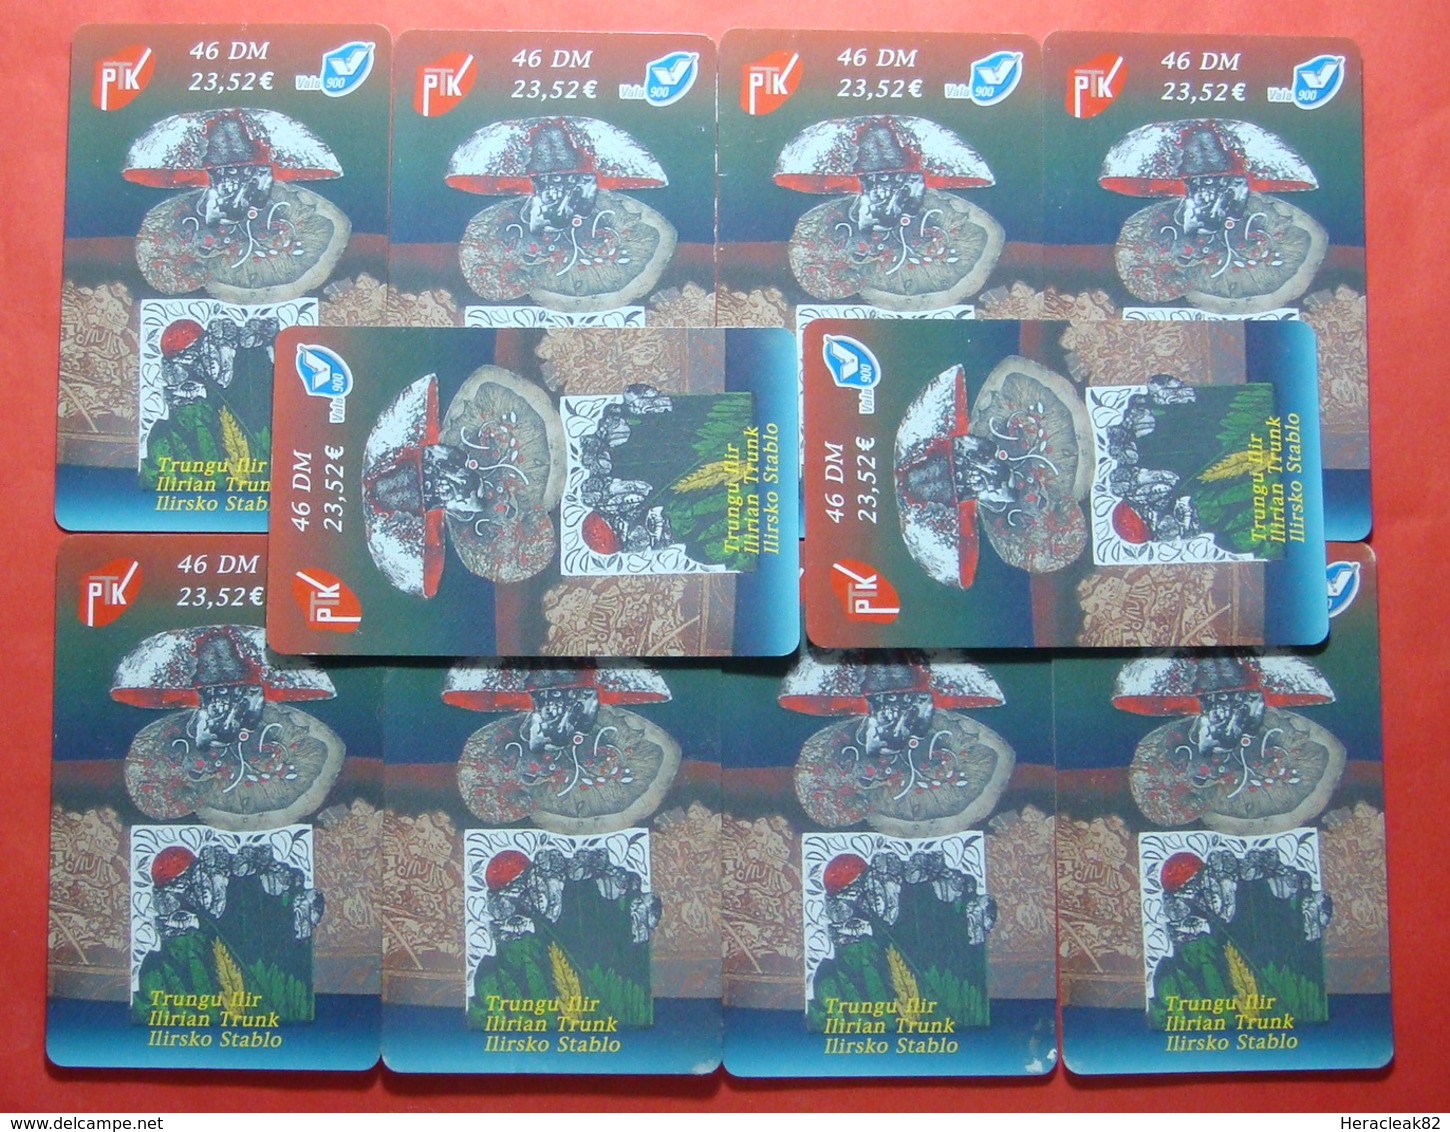 Series 01, Kosovo Lot Of 10 Prepaid CARD 23,52 EURO Used Operator VALA900 (Alcatel) *Illyrian Trunk* - Kosovo